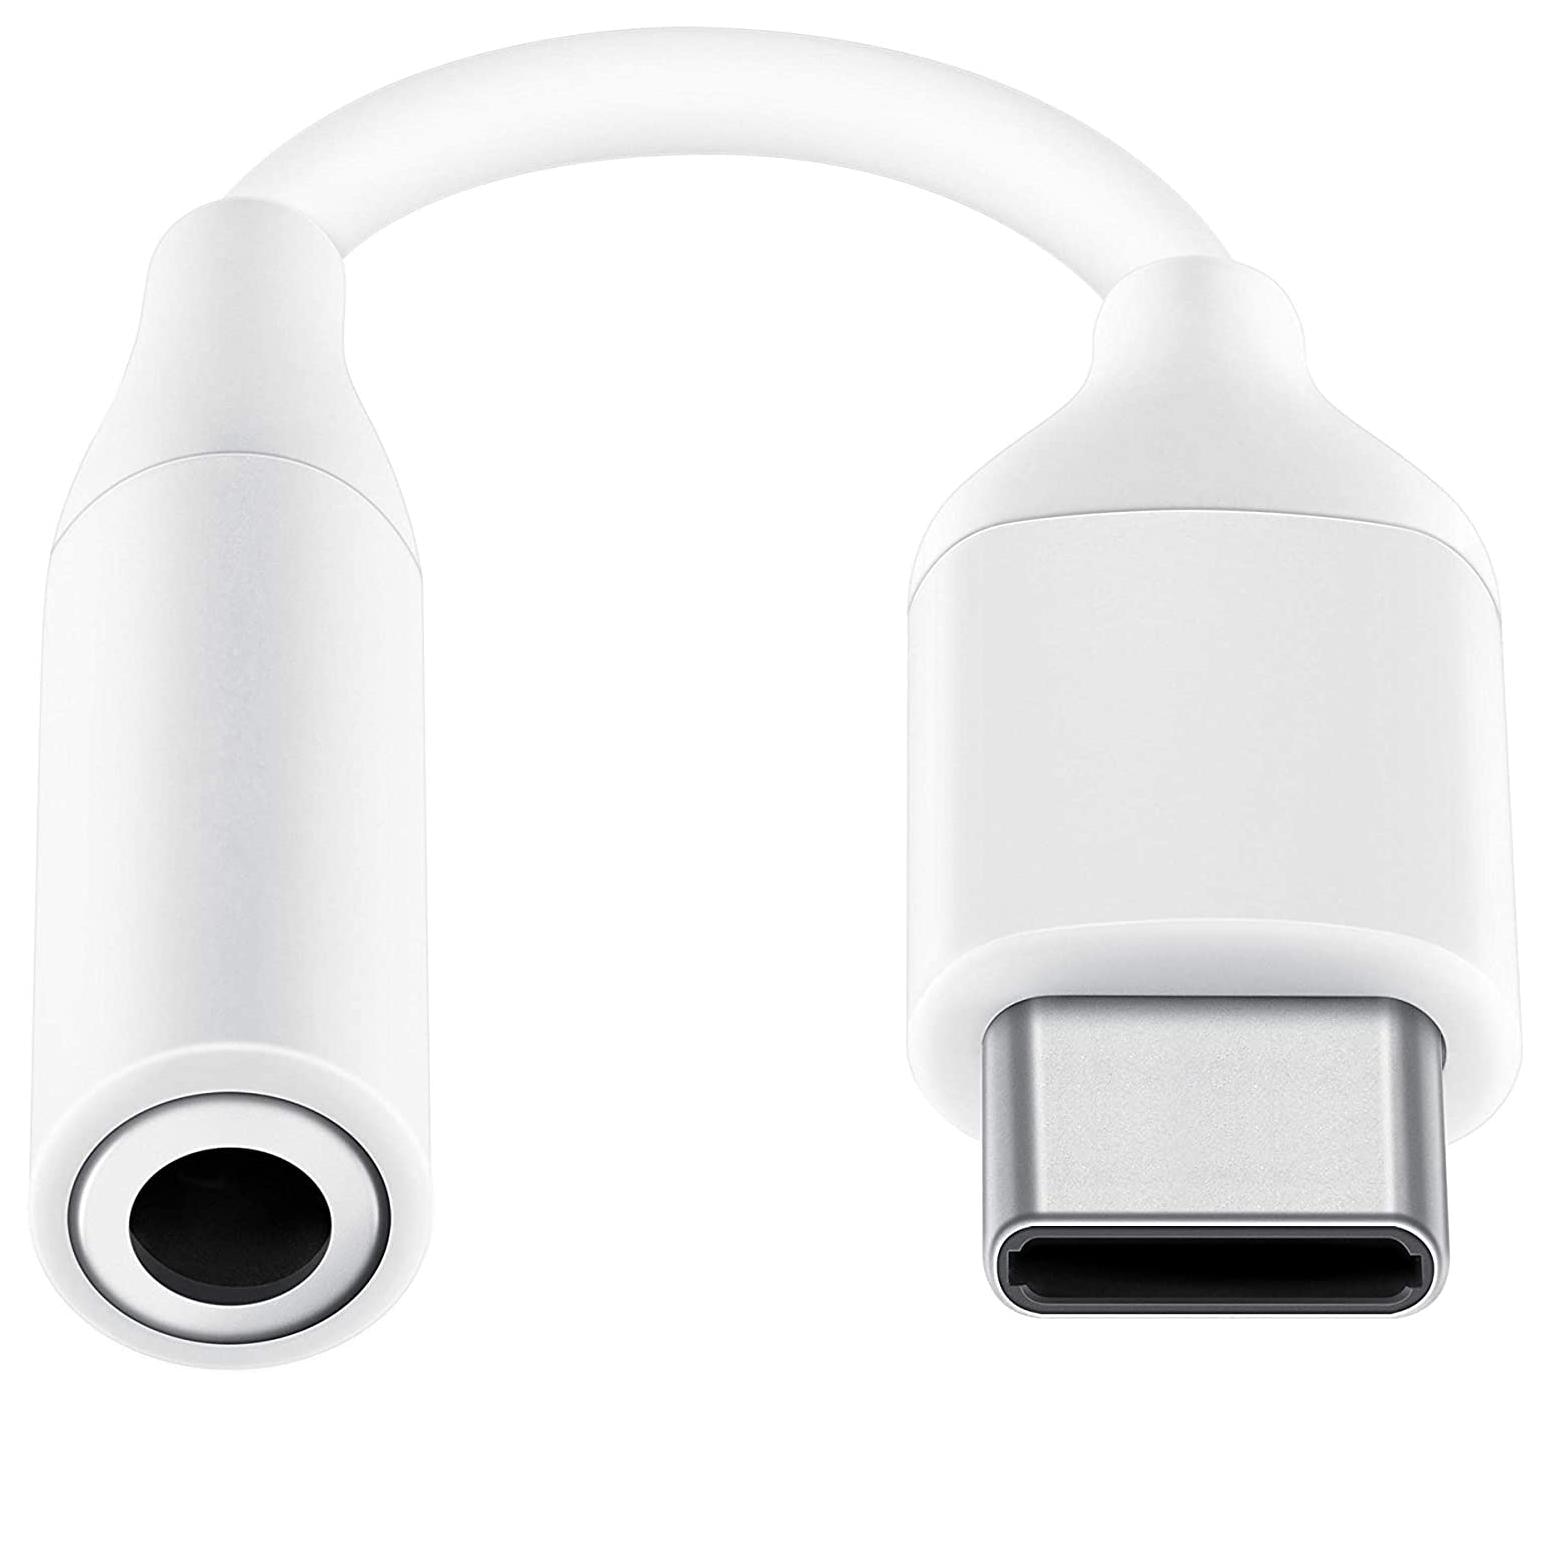 Adapteri USB-C - 3.5mm DAC (EE-UC10JU) USB-C Valkoinen